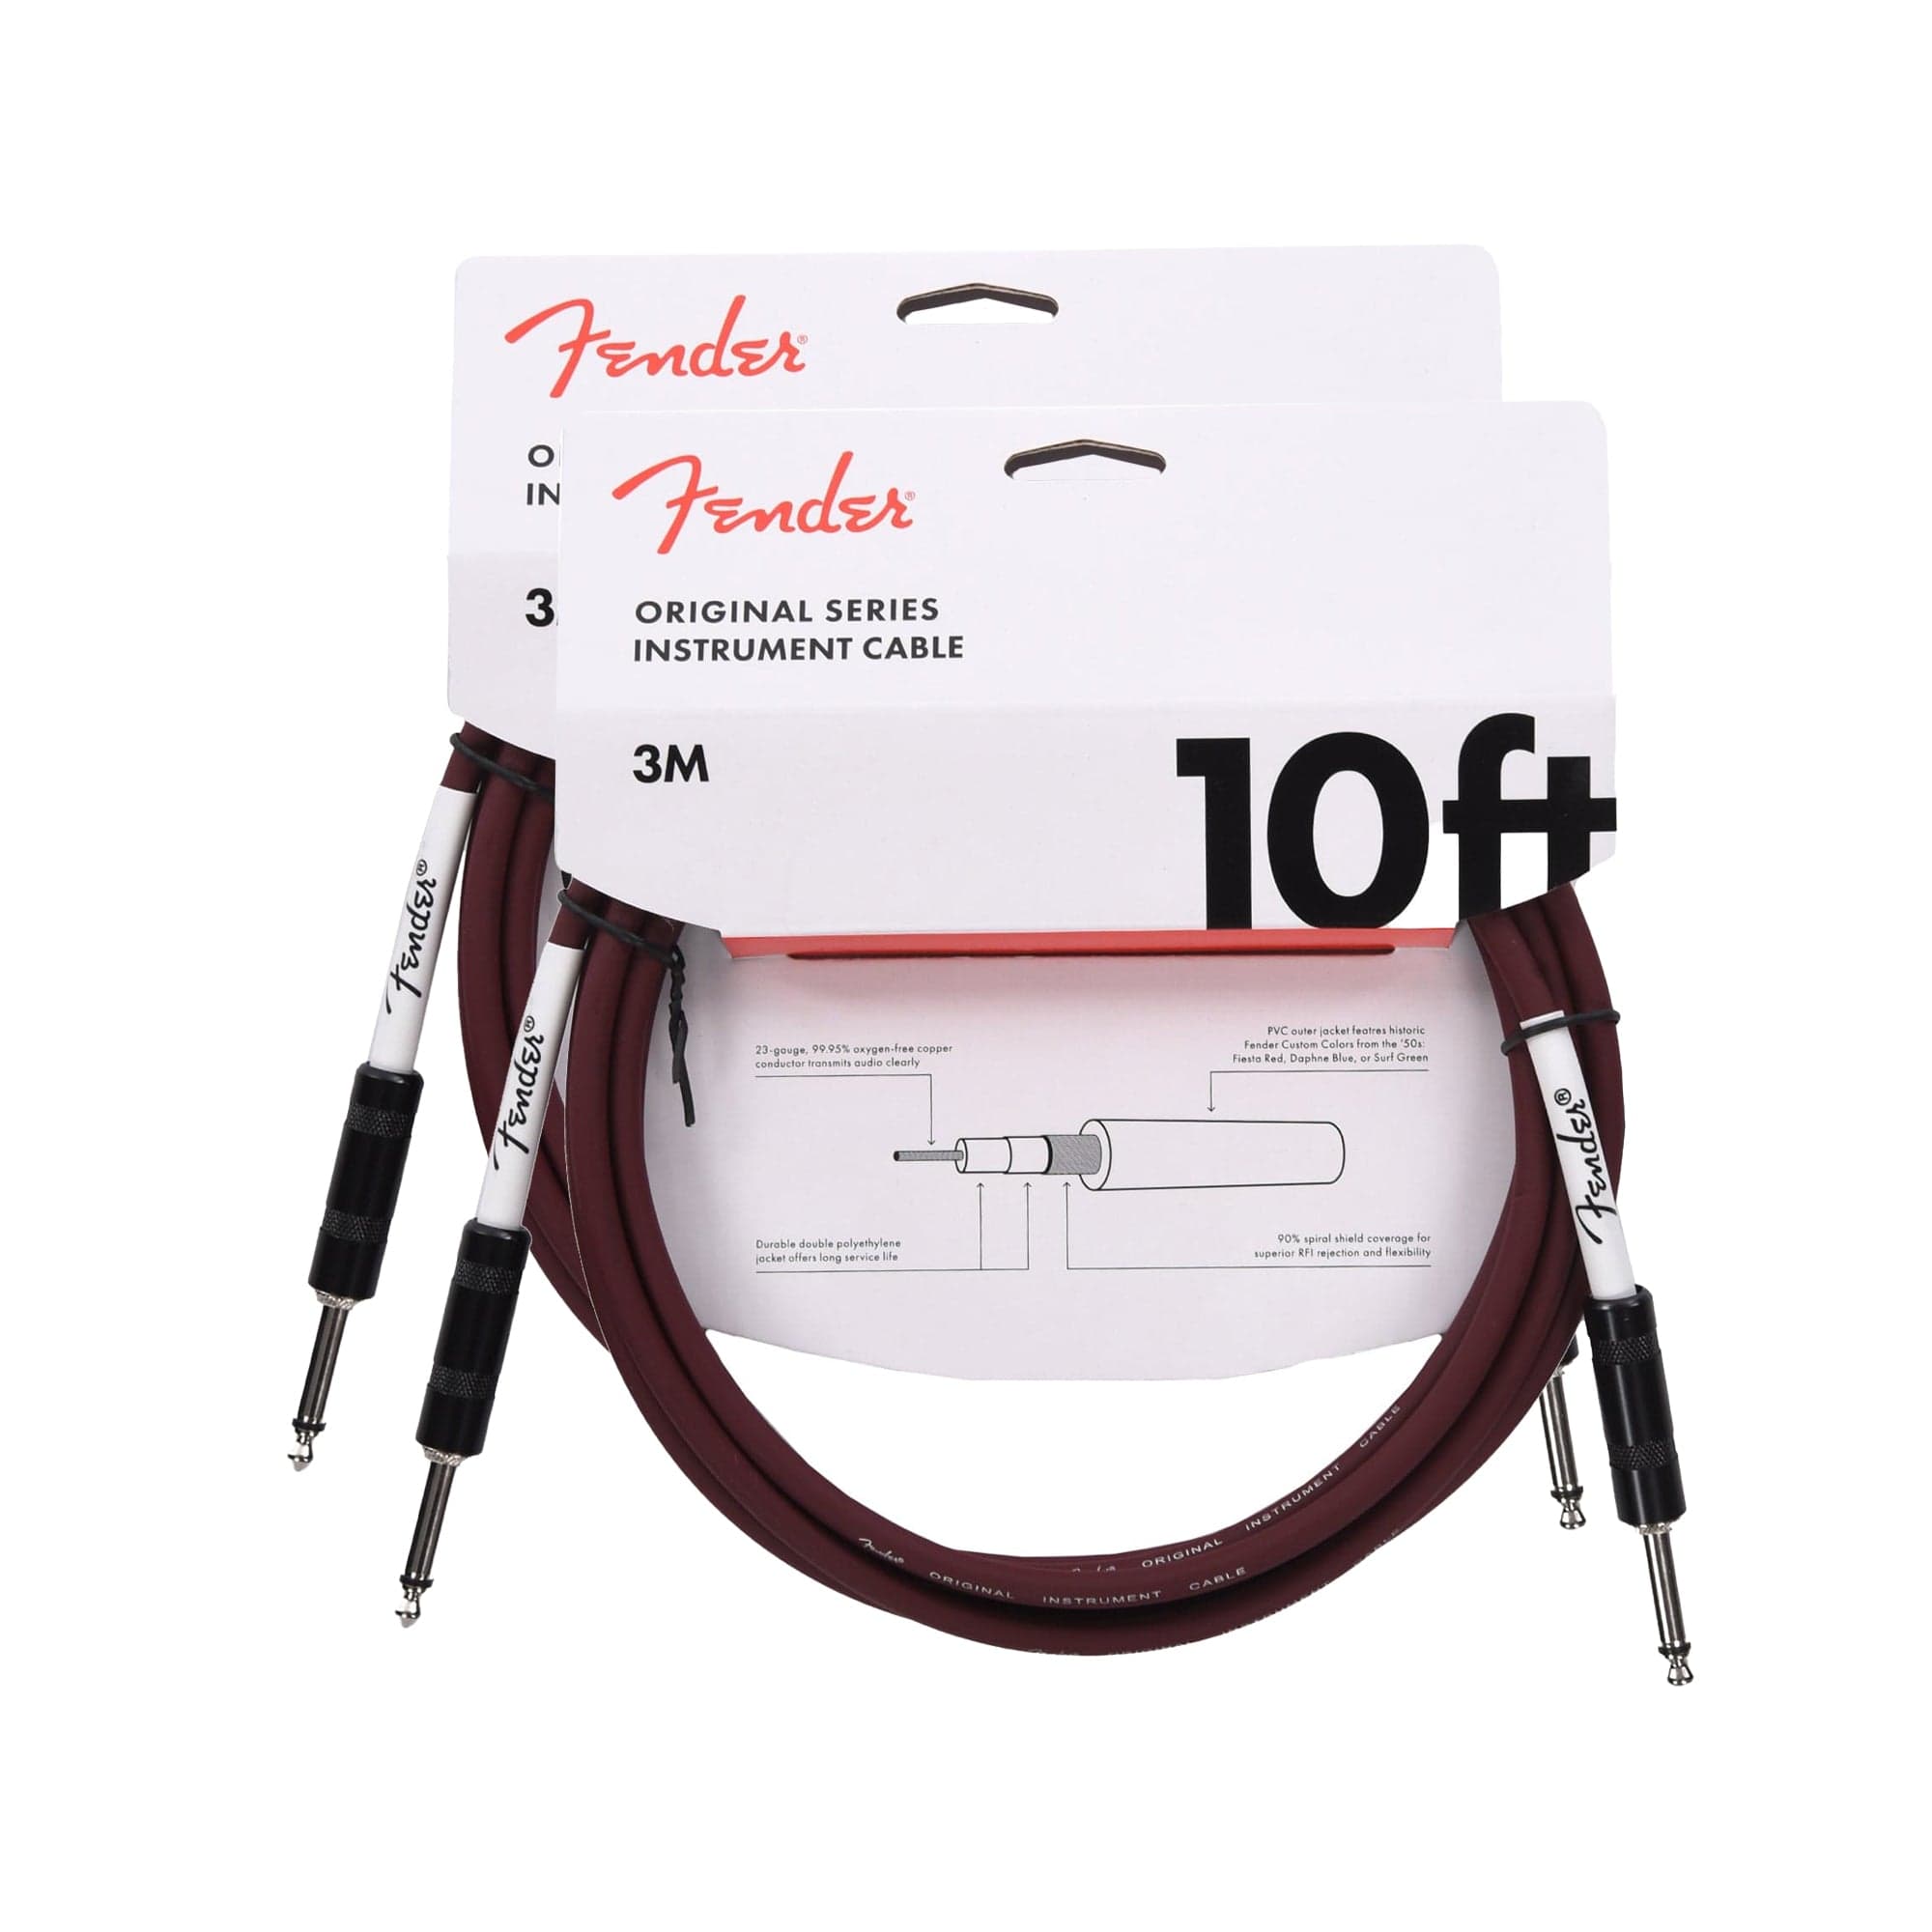 Fender Original 10' Instrument Cable Oxblood 2 Pack Bundle Accessories / Cables